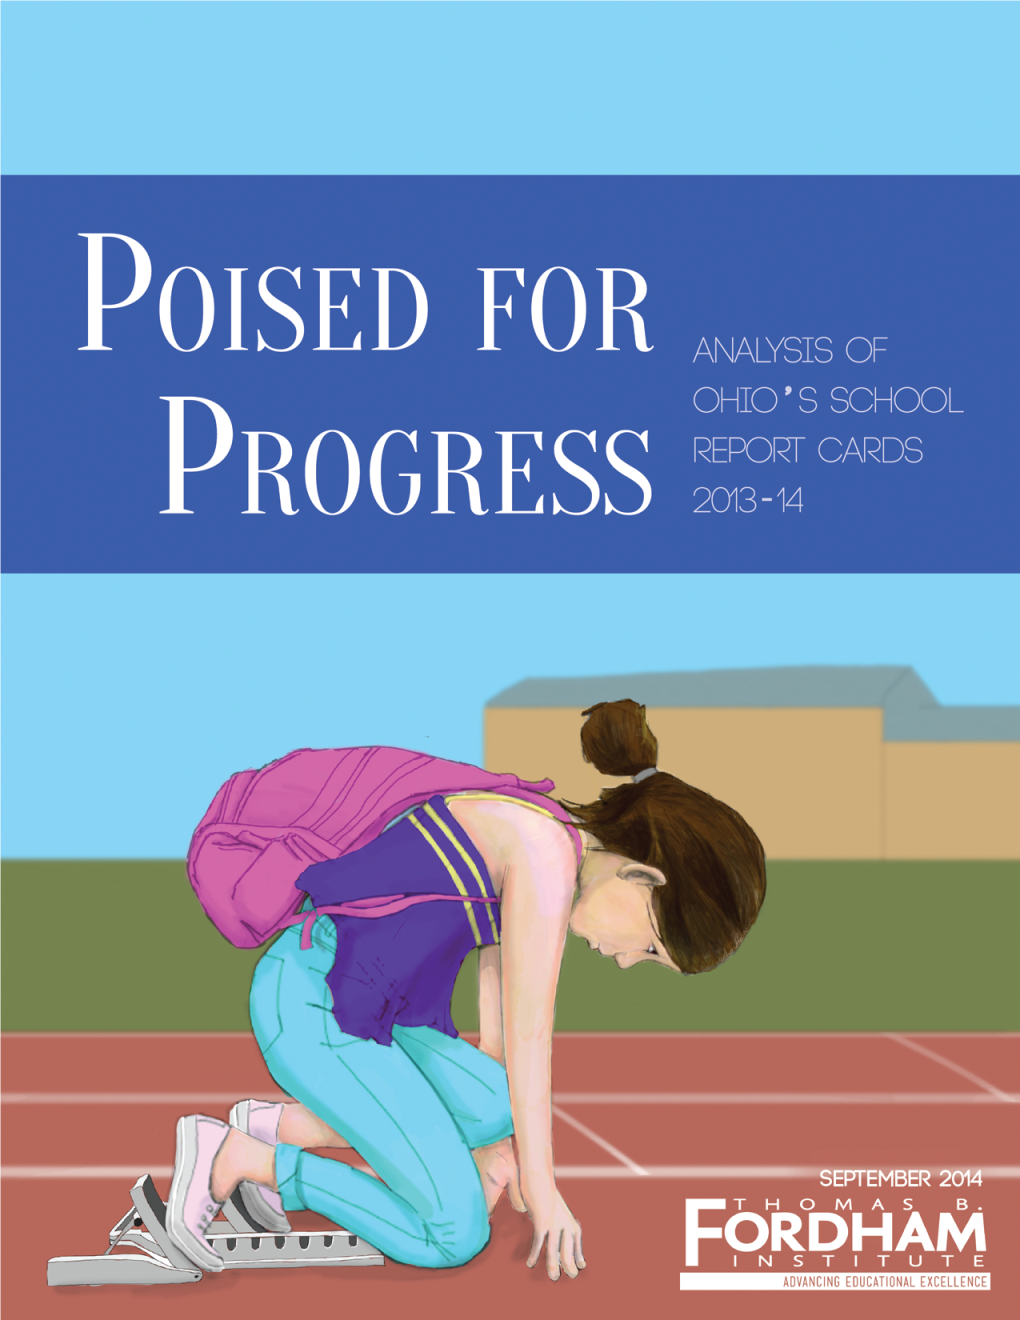 Poised for Progress: Analysis of Ohio's School Report Cards, 2013-14